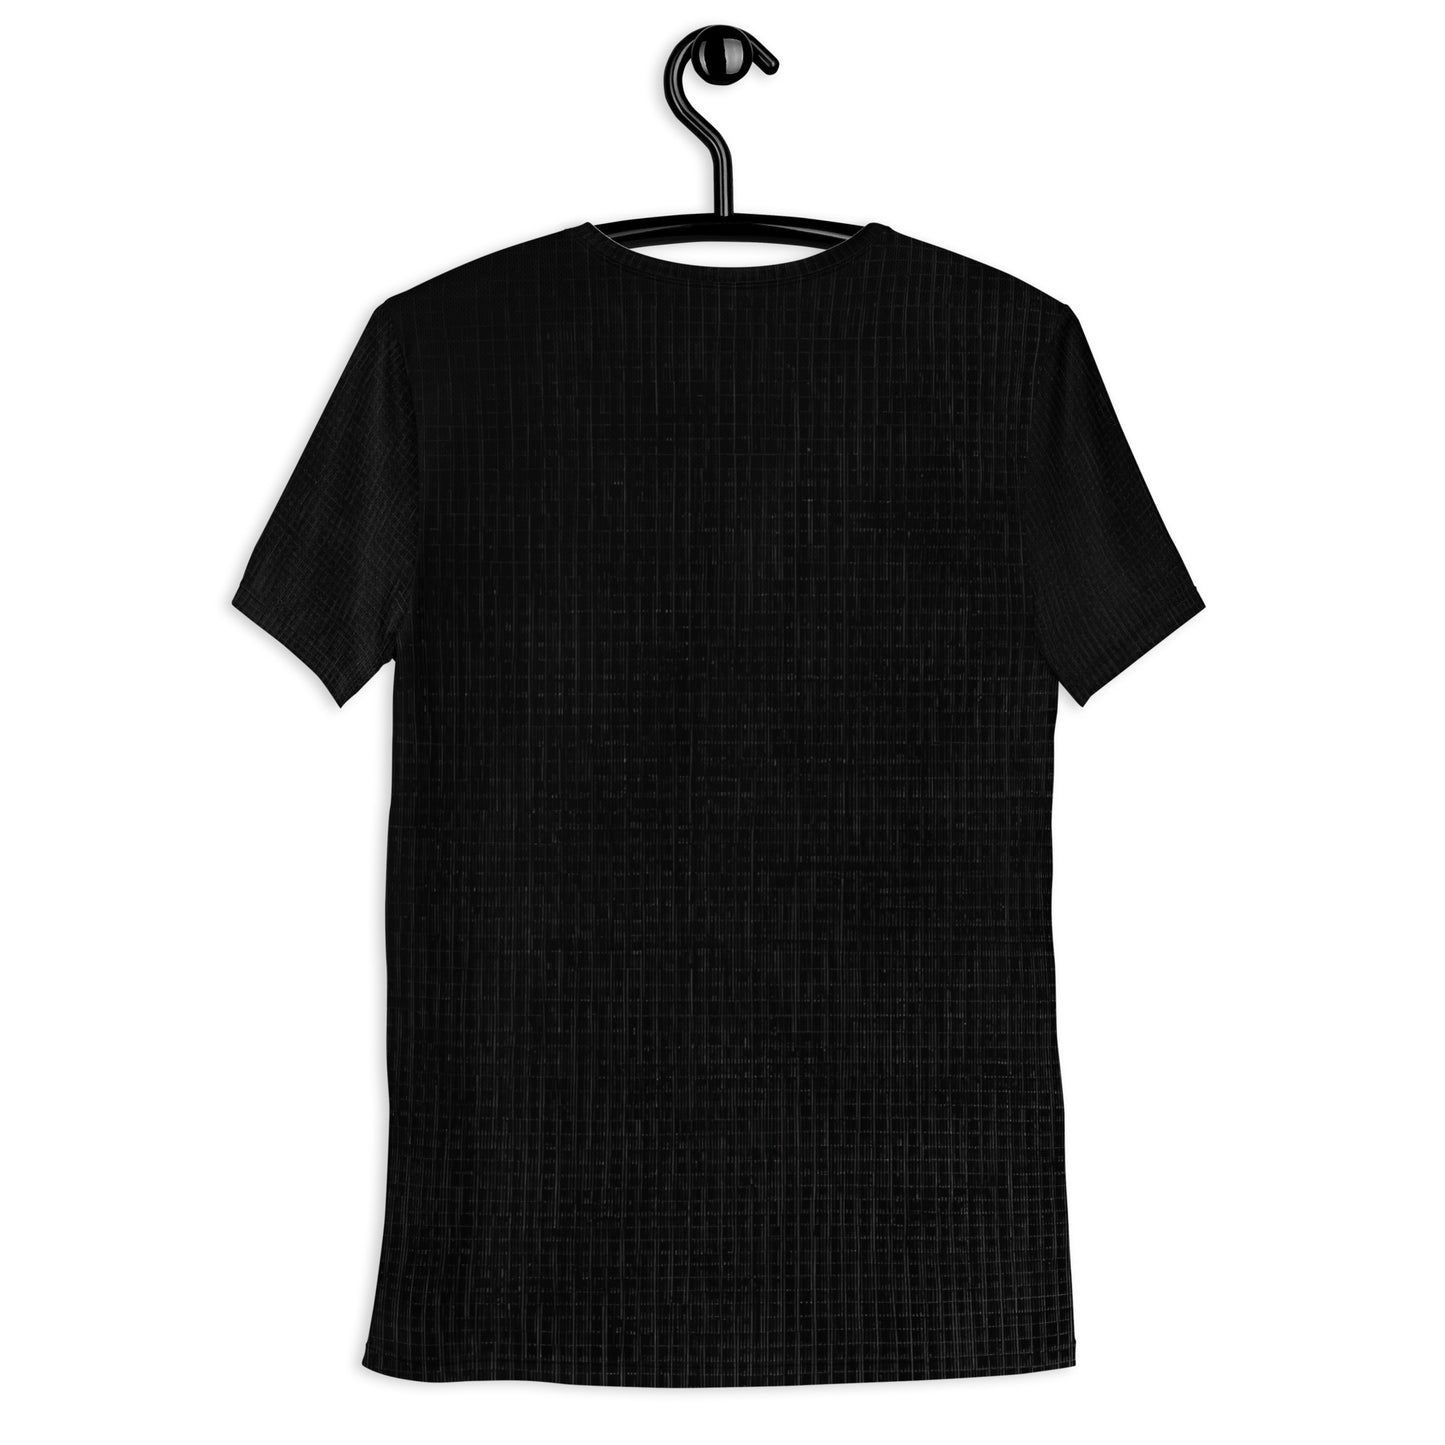 Just Black Athletic T-shirt